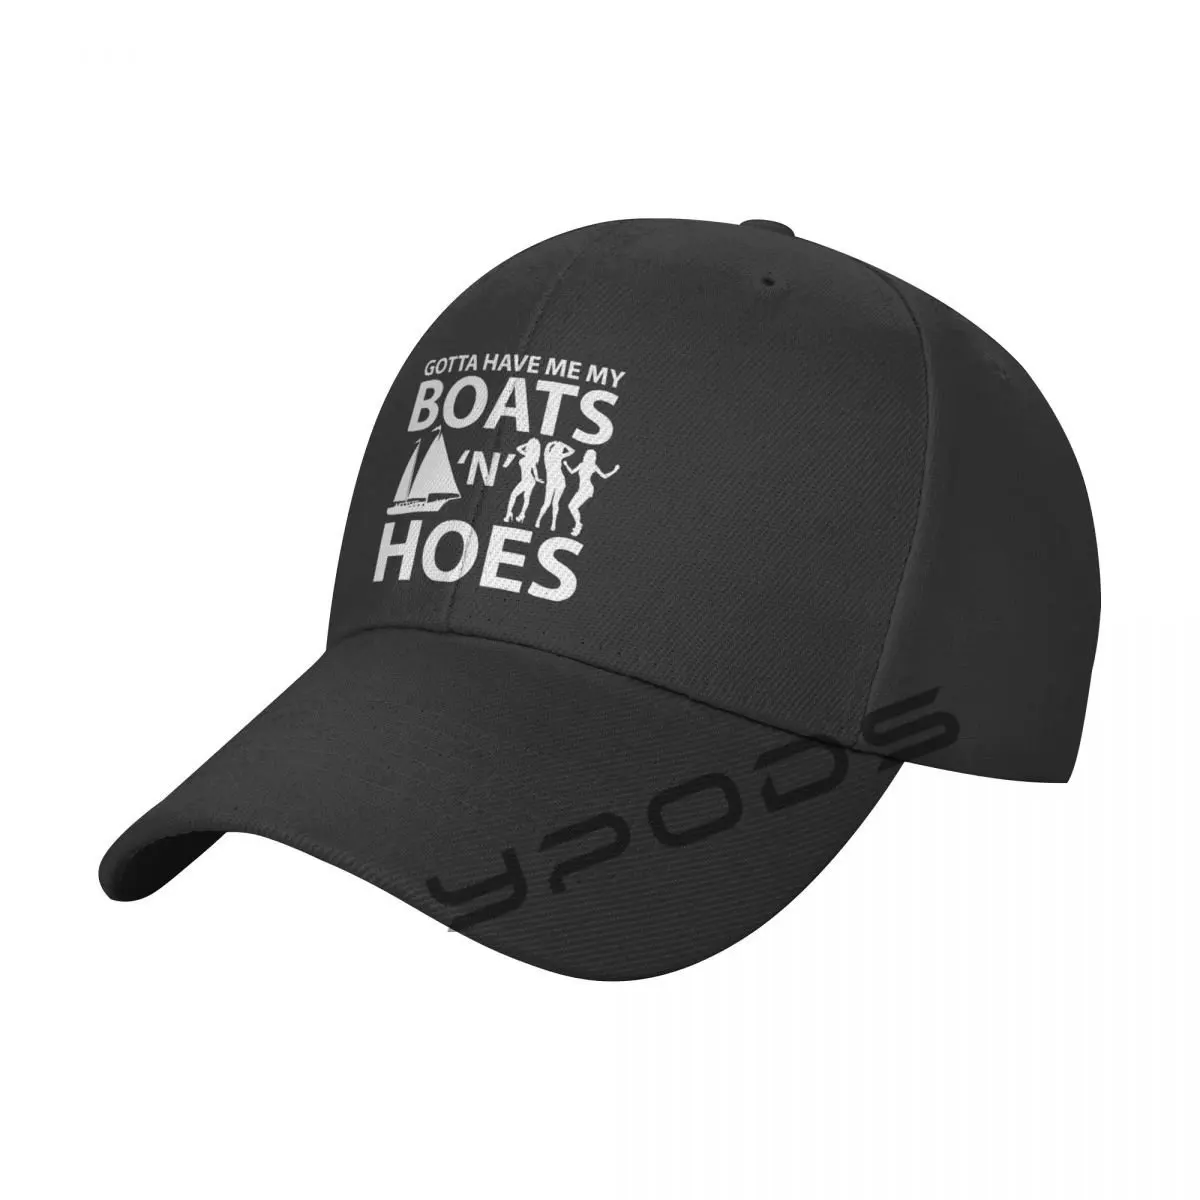 

Boats 'n' Hoes Baseball Caps For Men Snapback Plain Solid Color Gorras Caps Hats Fashion Casquette Bone FemaLe Dad Cap